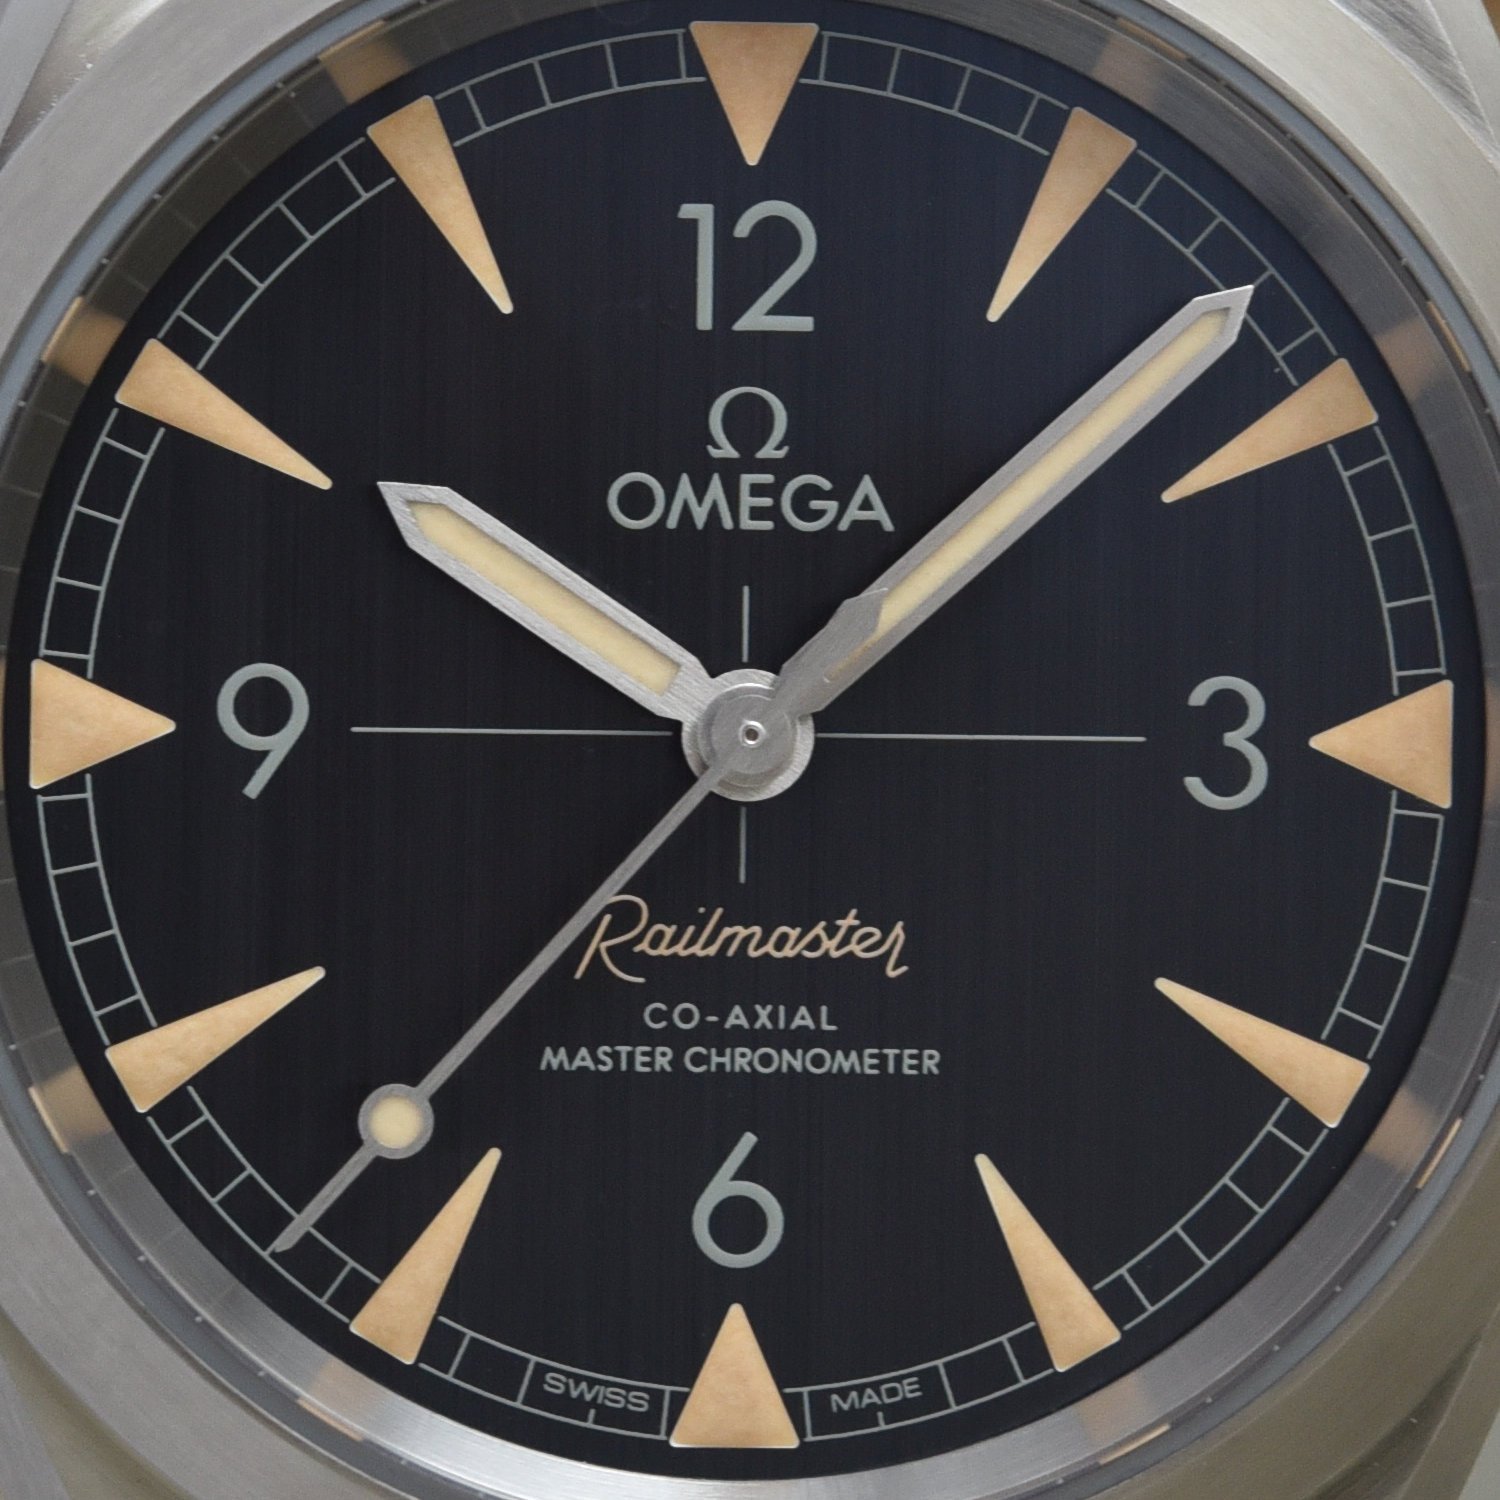 Omega Seamaster Railmaster Co-Axial Master Chronometer